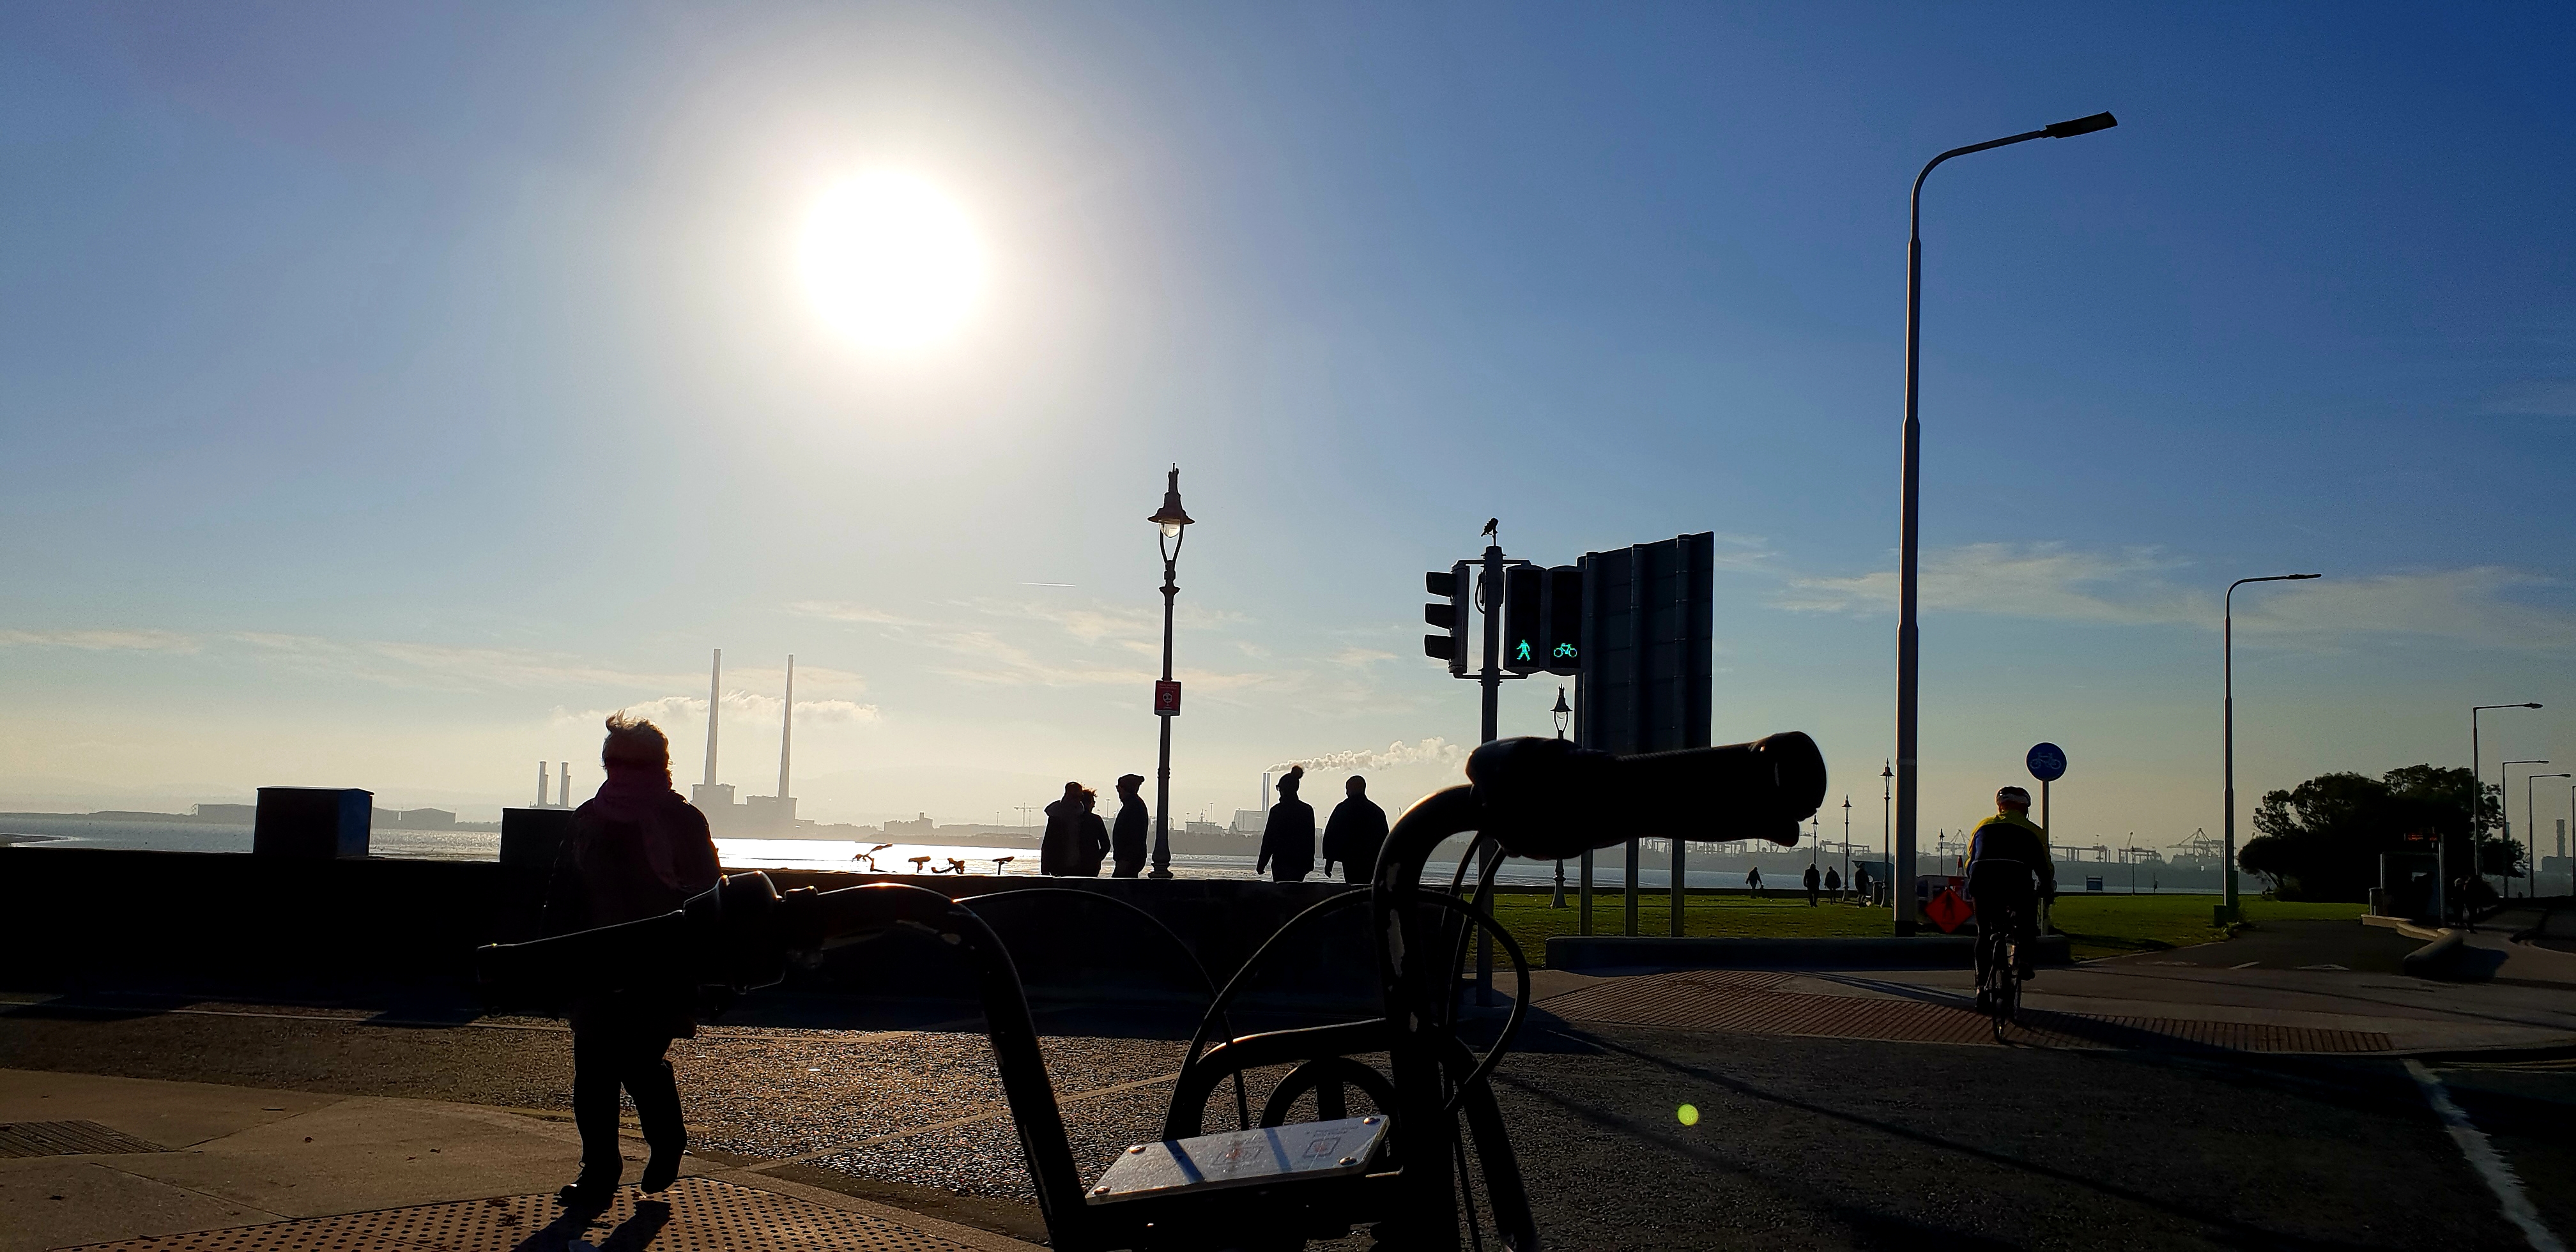 Enjoying the winter sunshine on Dublin’s stationless bicycle share scheme.